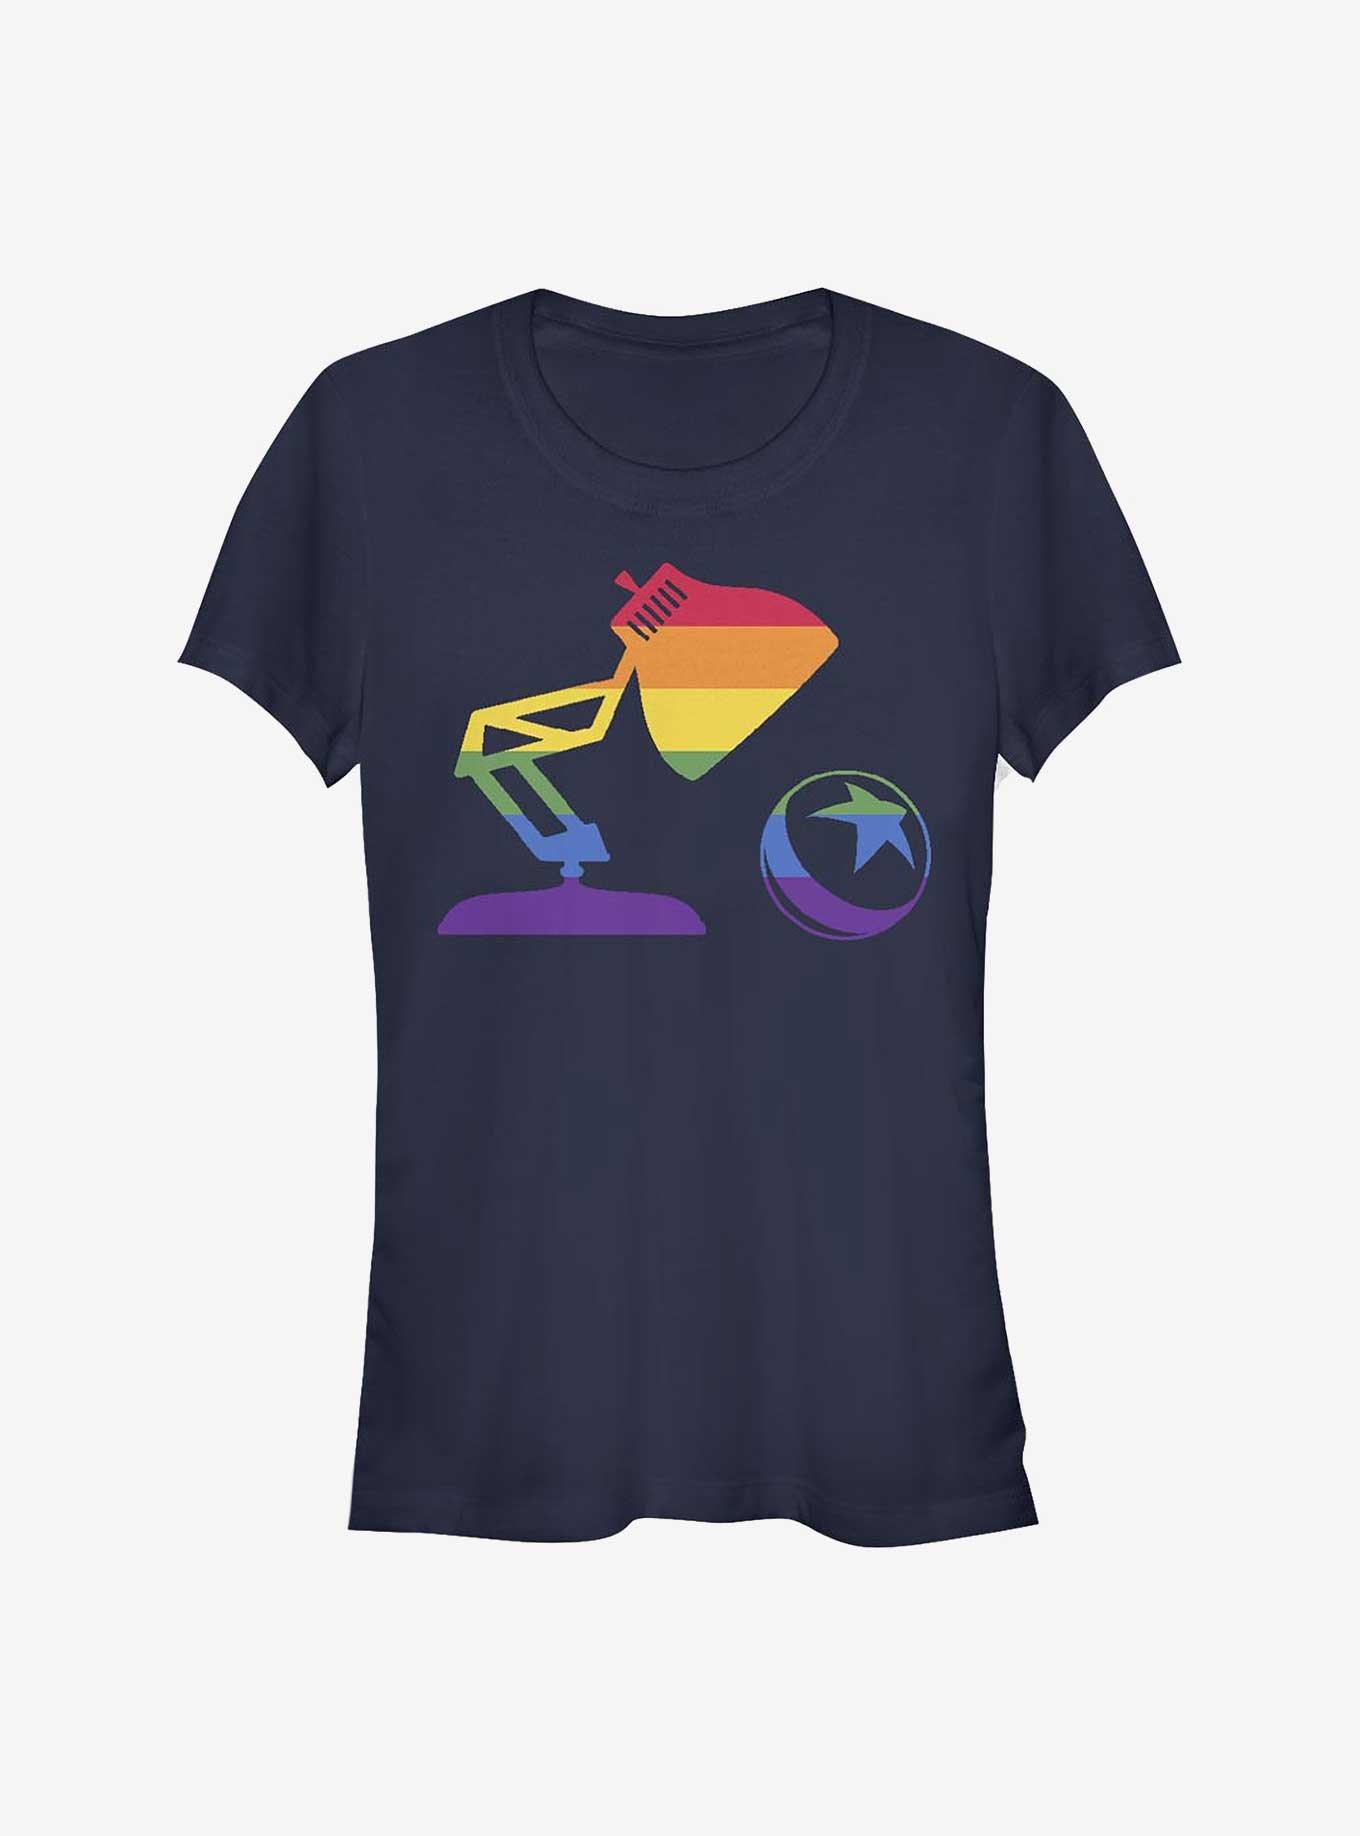 Pixar Luxo Rainbow Logo Girls T-Shirt, NAVY, hi-res